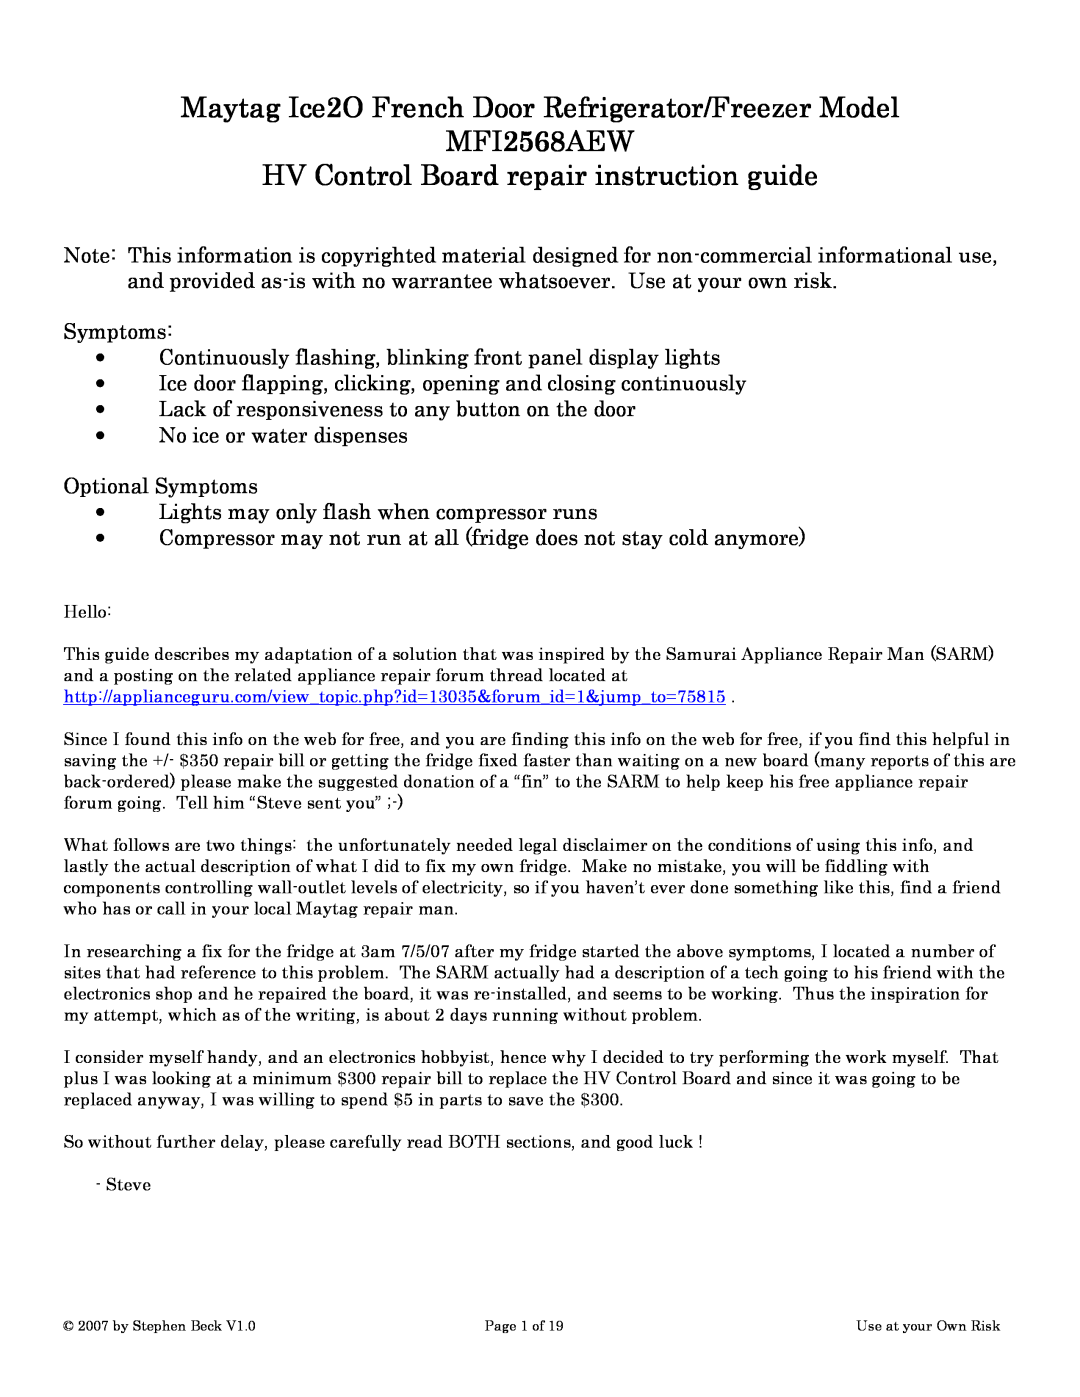 Maytag MFI2568AEW manual HV Control Board repair instruction guide 